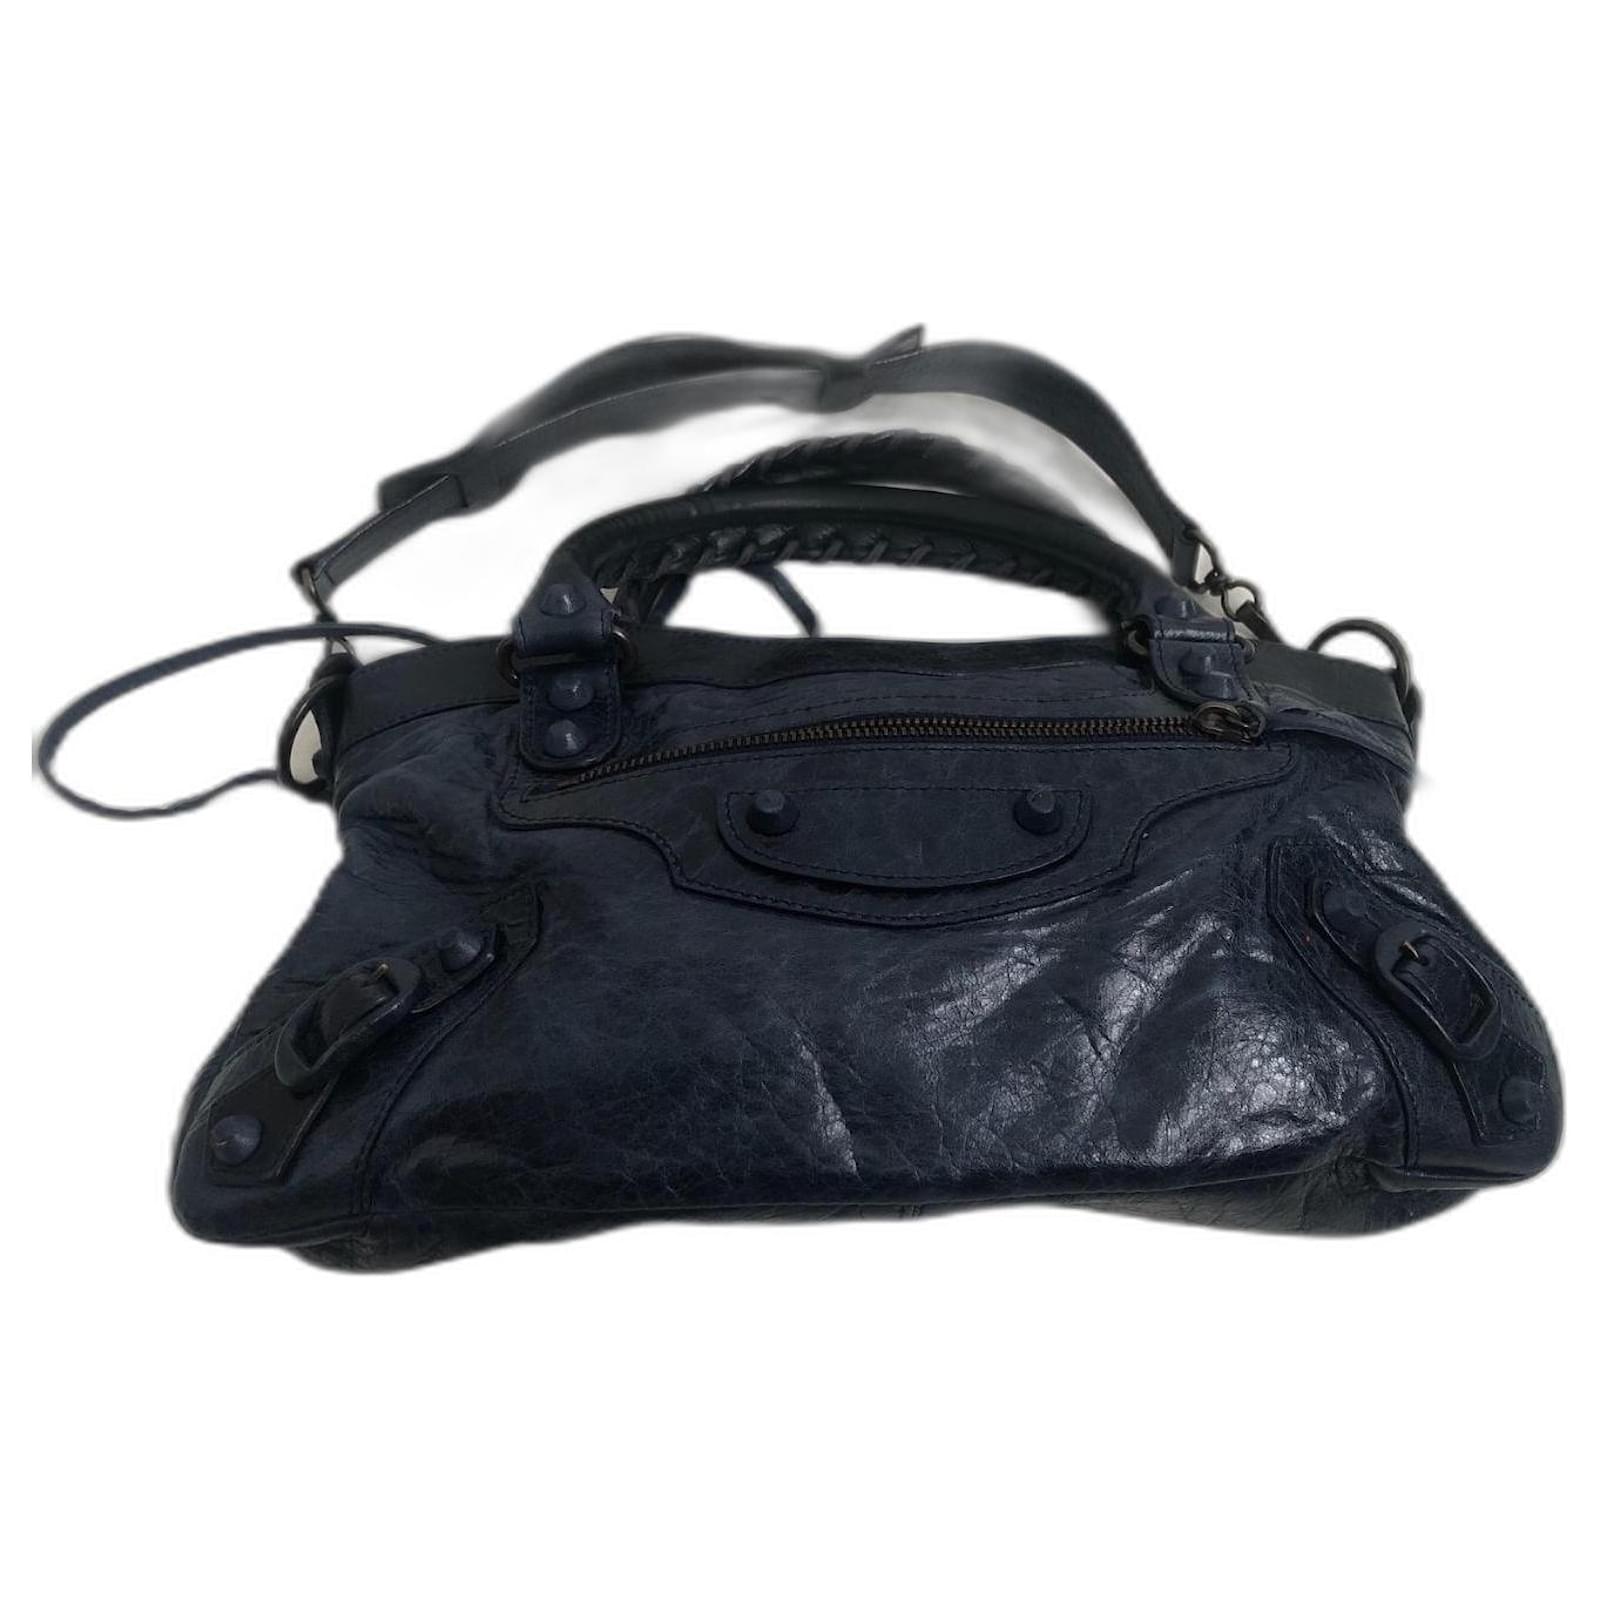 Balenciaga city bag in dark grey leather